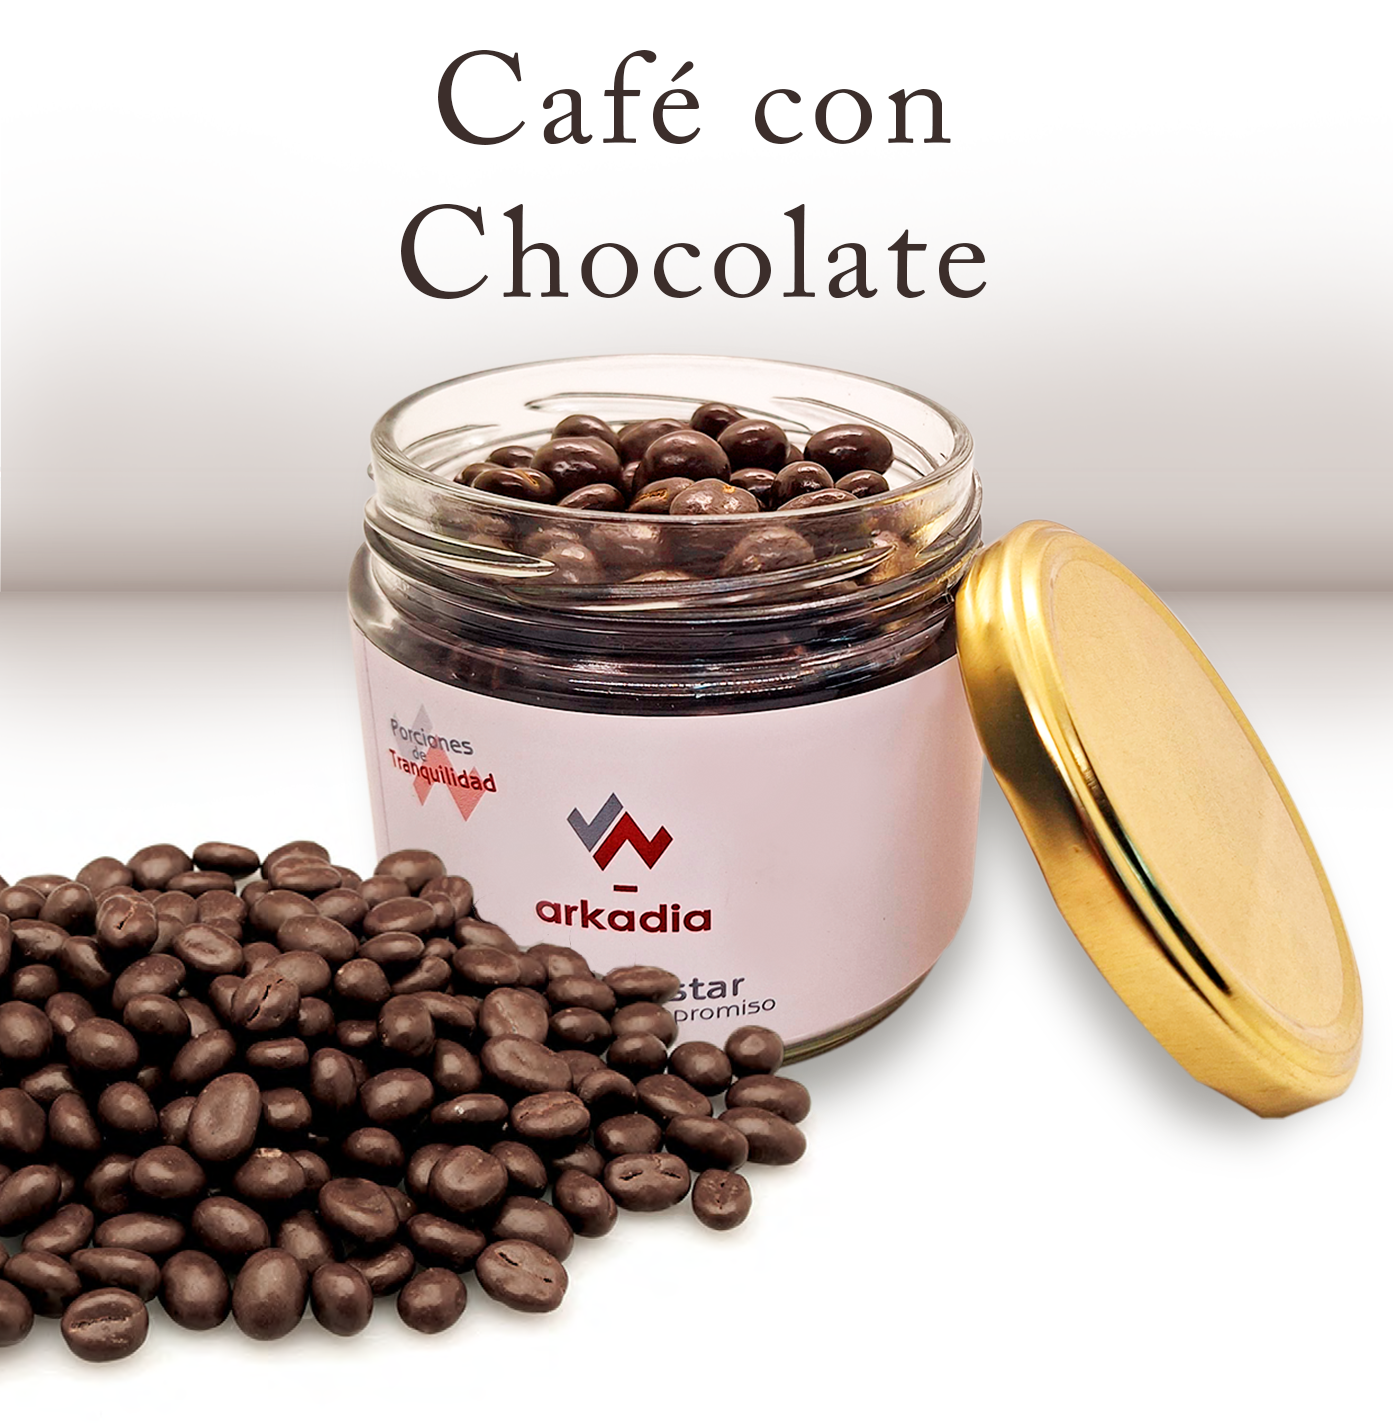 Chocolate Personalizado, Chocolate Promocional, Chocolate Corporativo